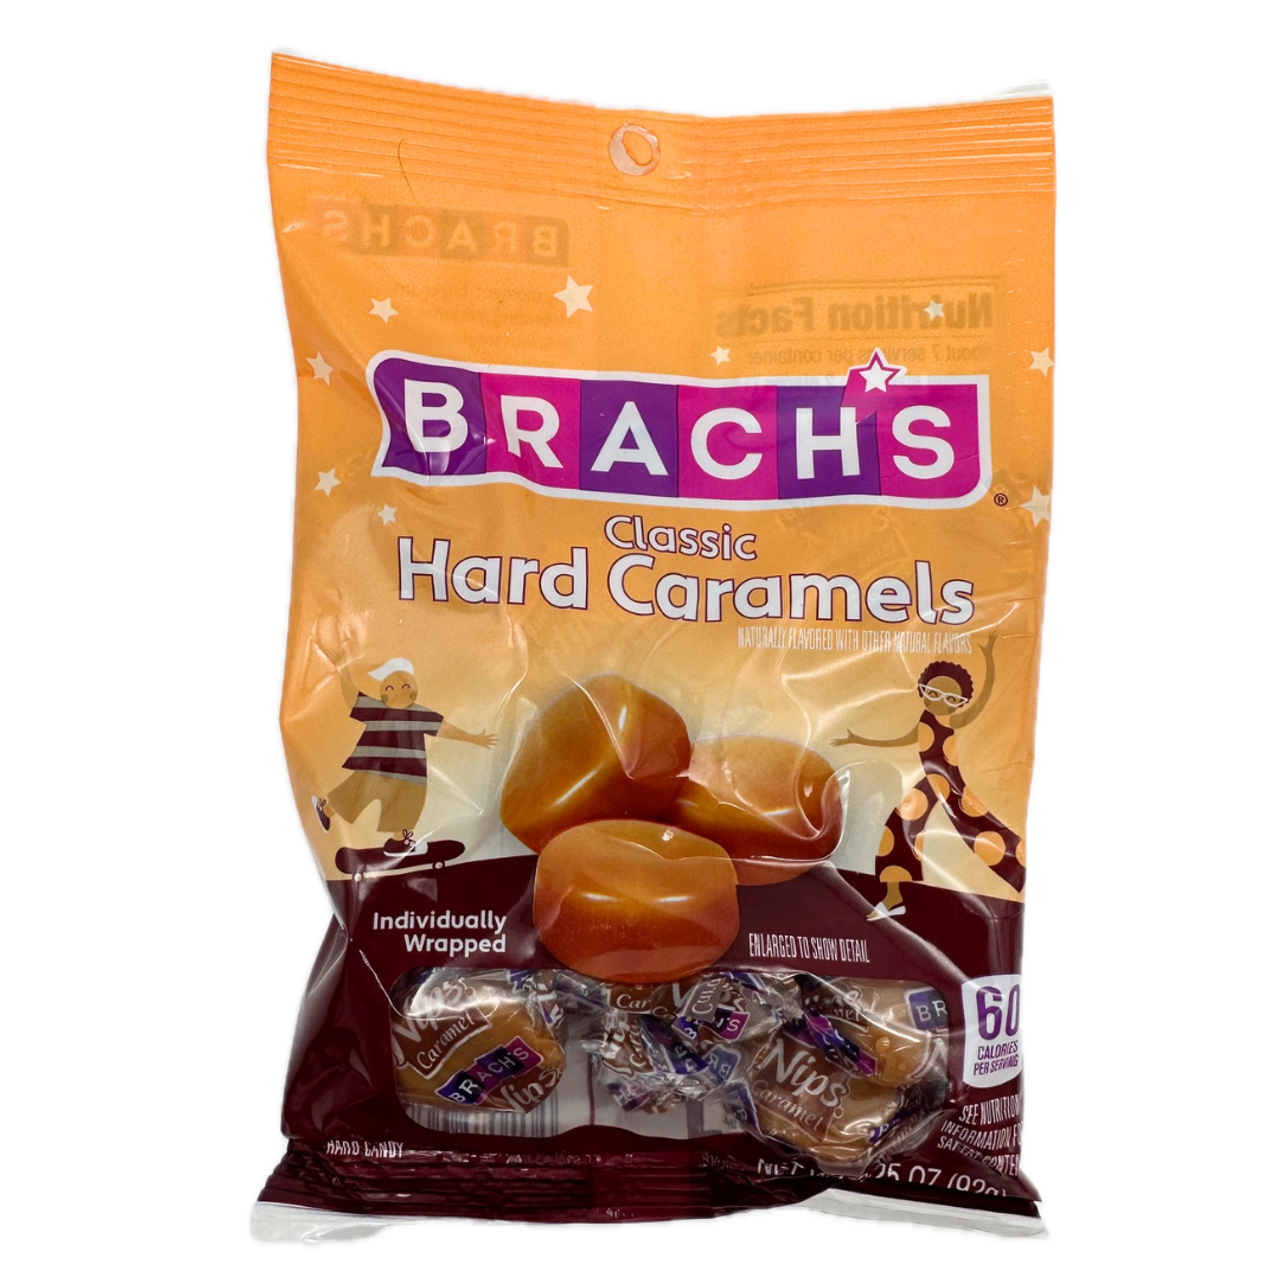 Brach's Caramel Nips - 3.25oz - Blair Candy Company